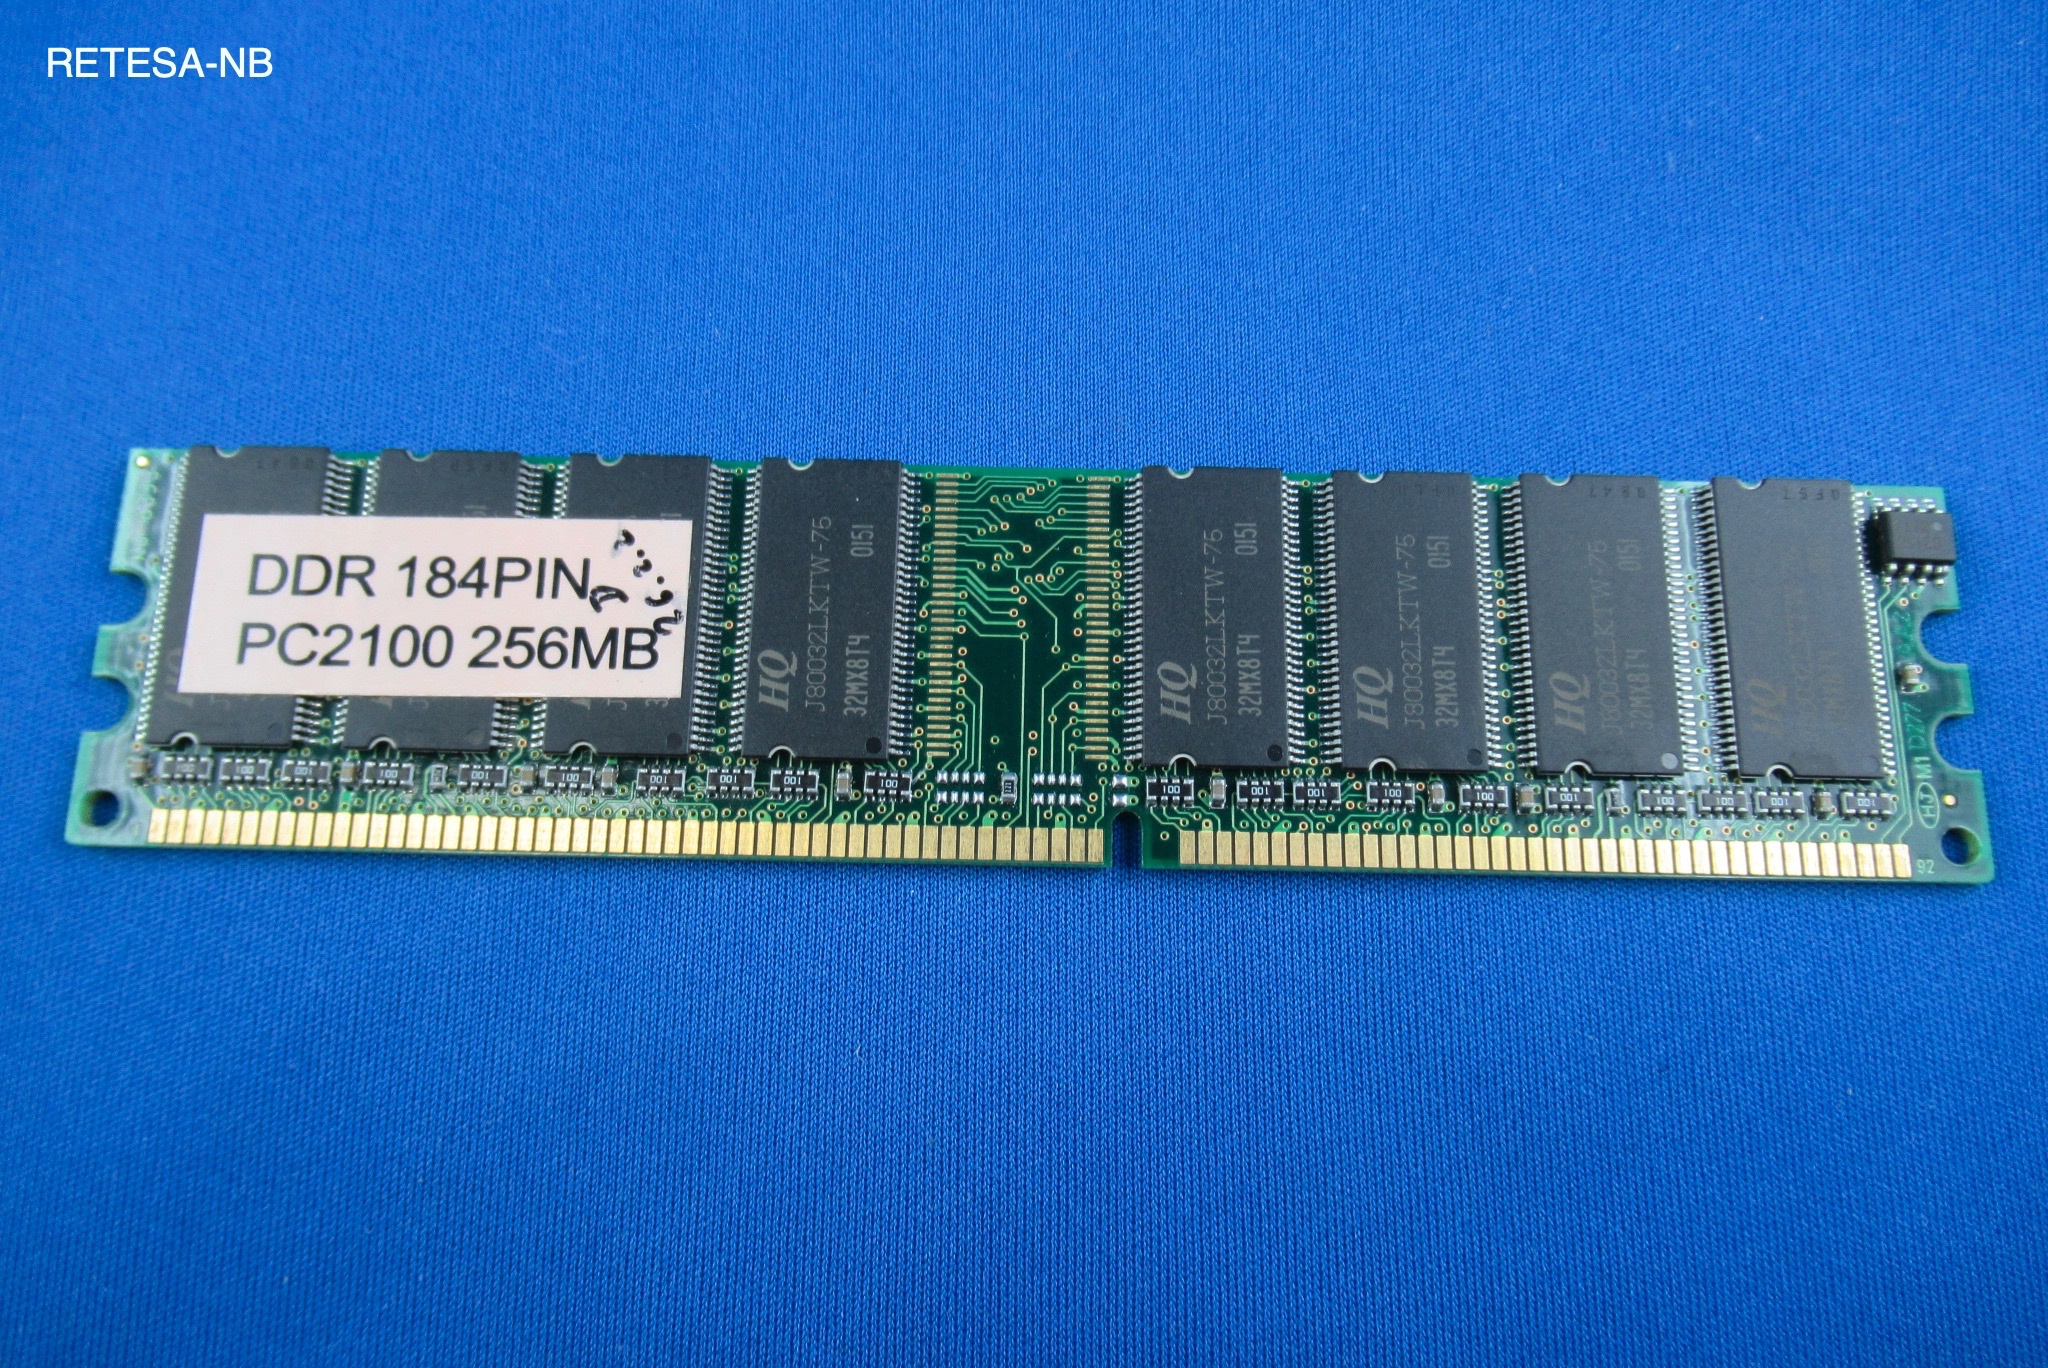 GEBRAUCHT DDR-RAM 256MB PC266 OEM